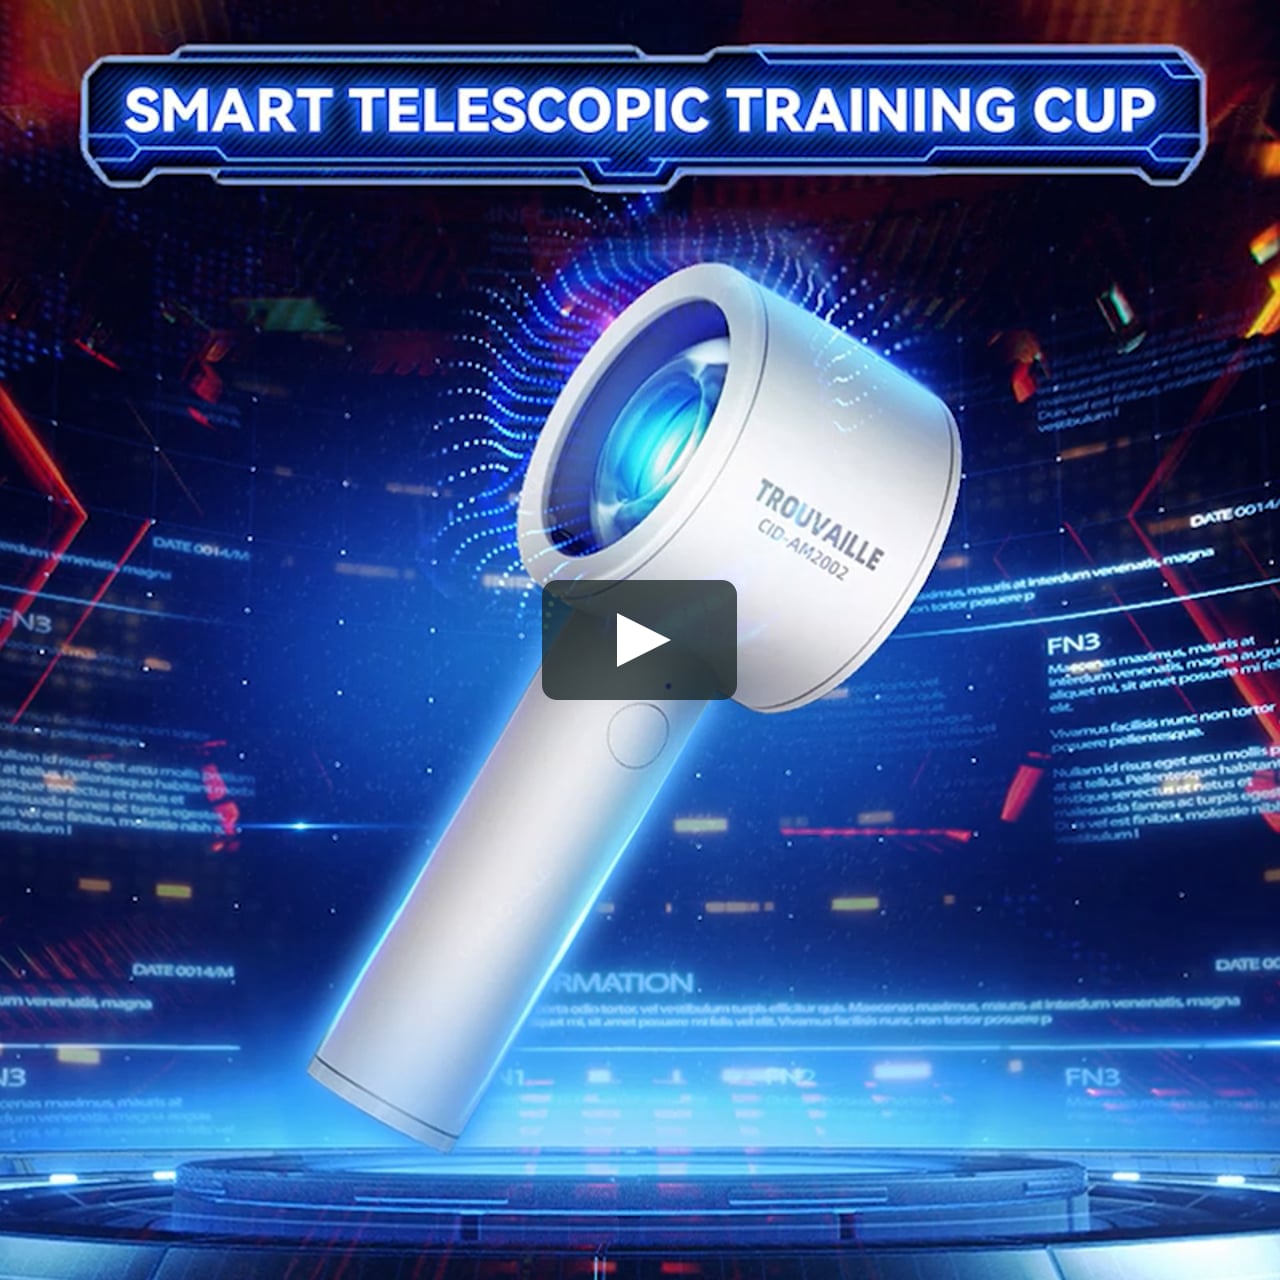 Trouvaille Cid Am2002 Smart Telescopic Masturbation Training Cup On Vimeo